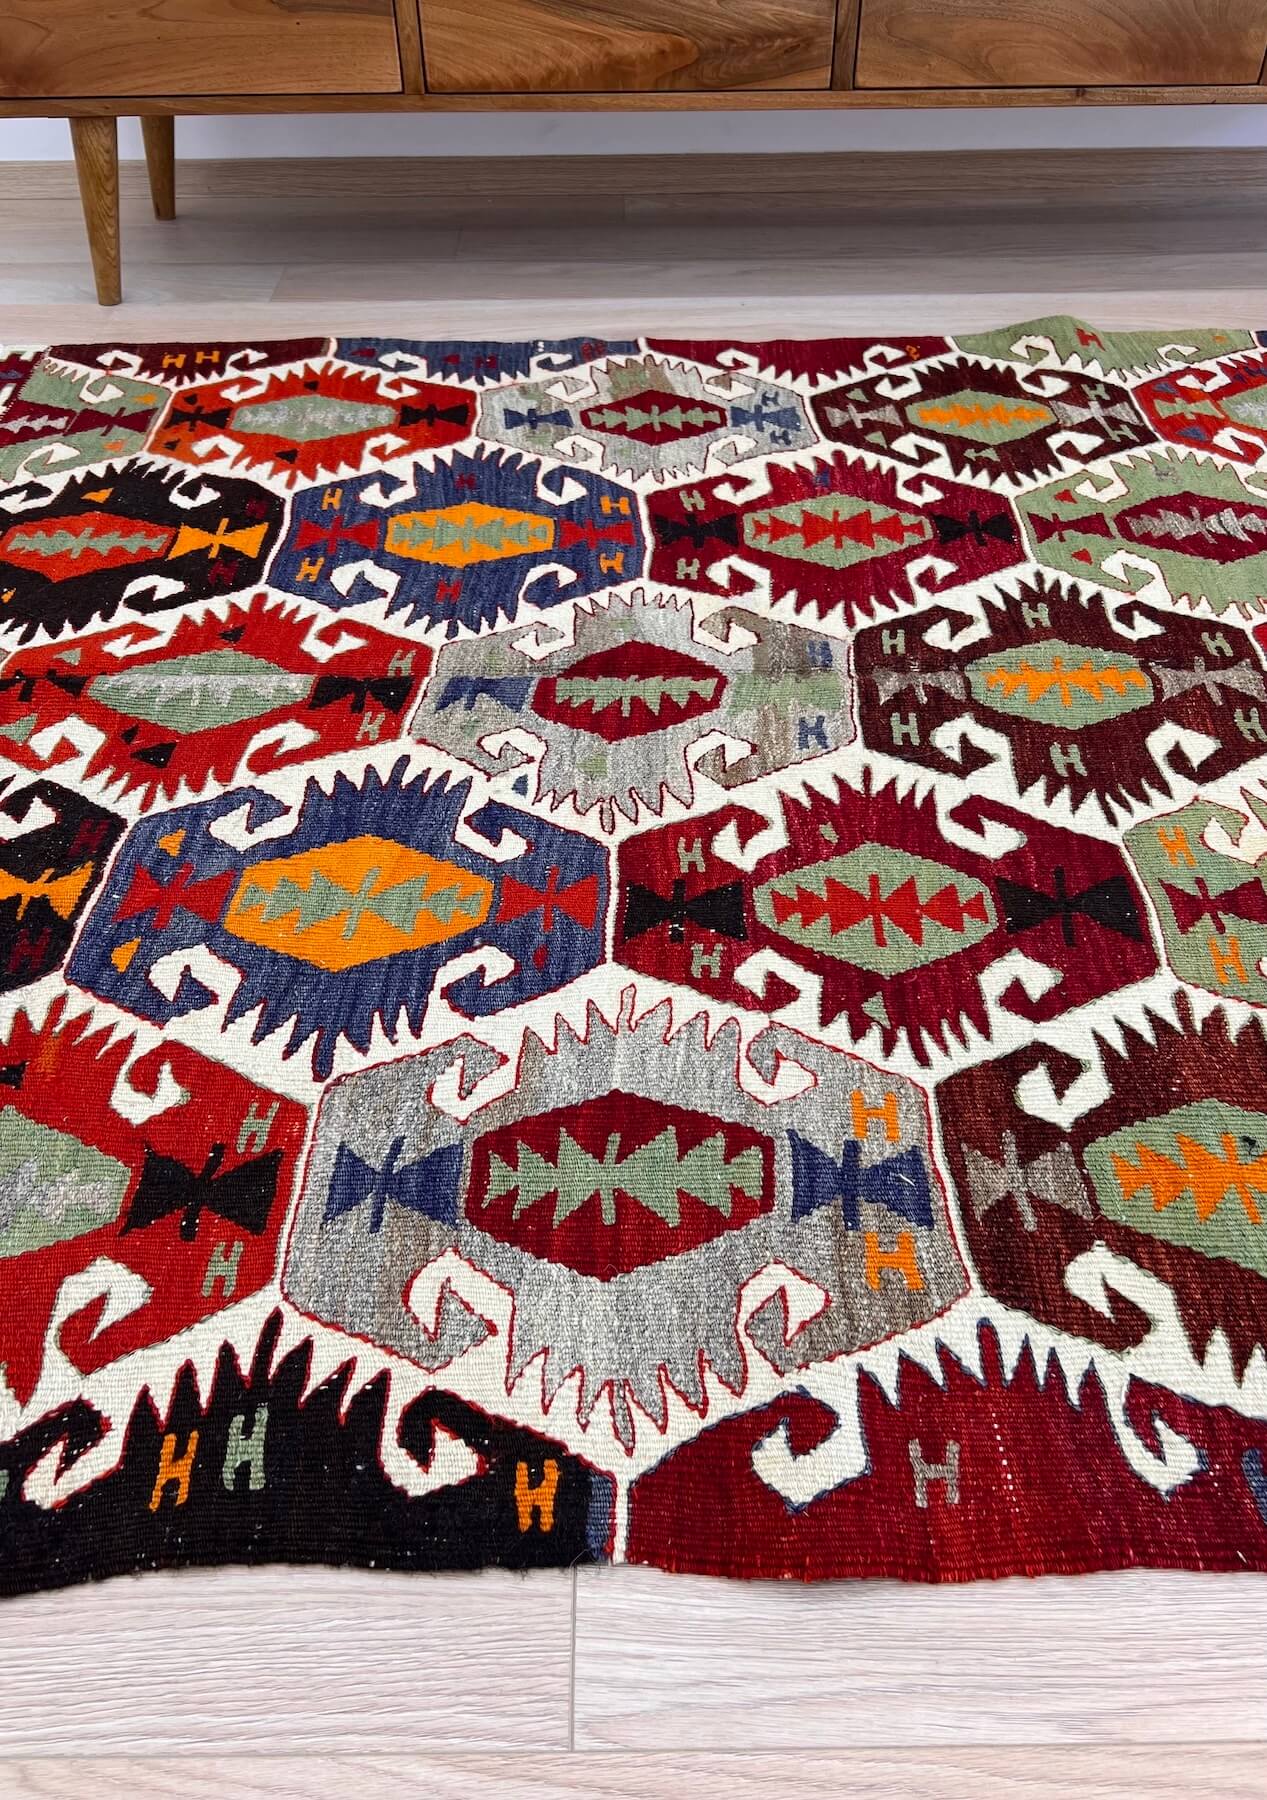 Lainey - Multi Color Turkish Kilim Rug - kudenrugs